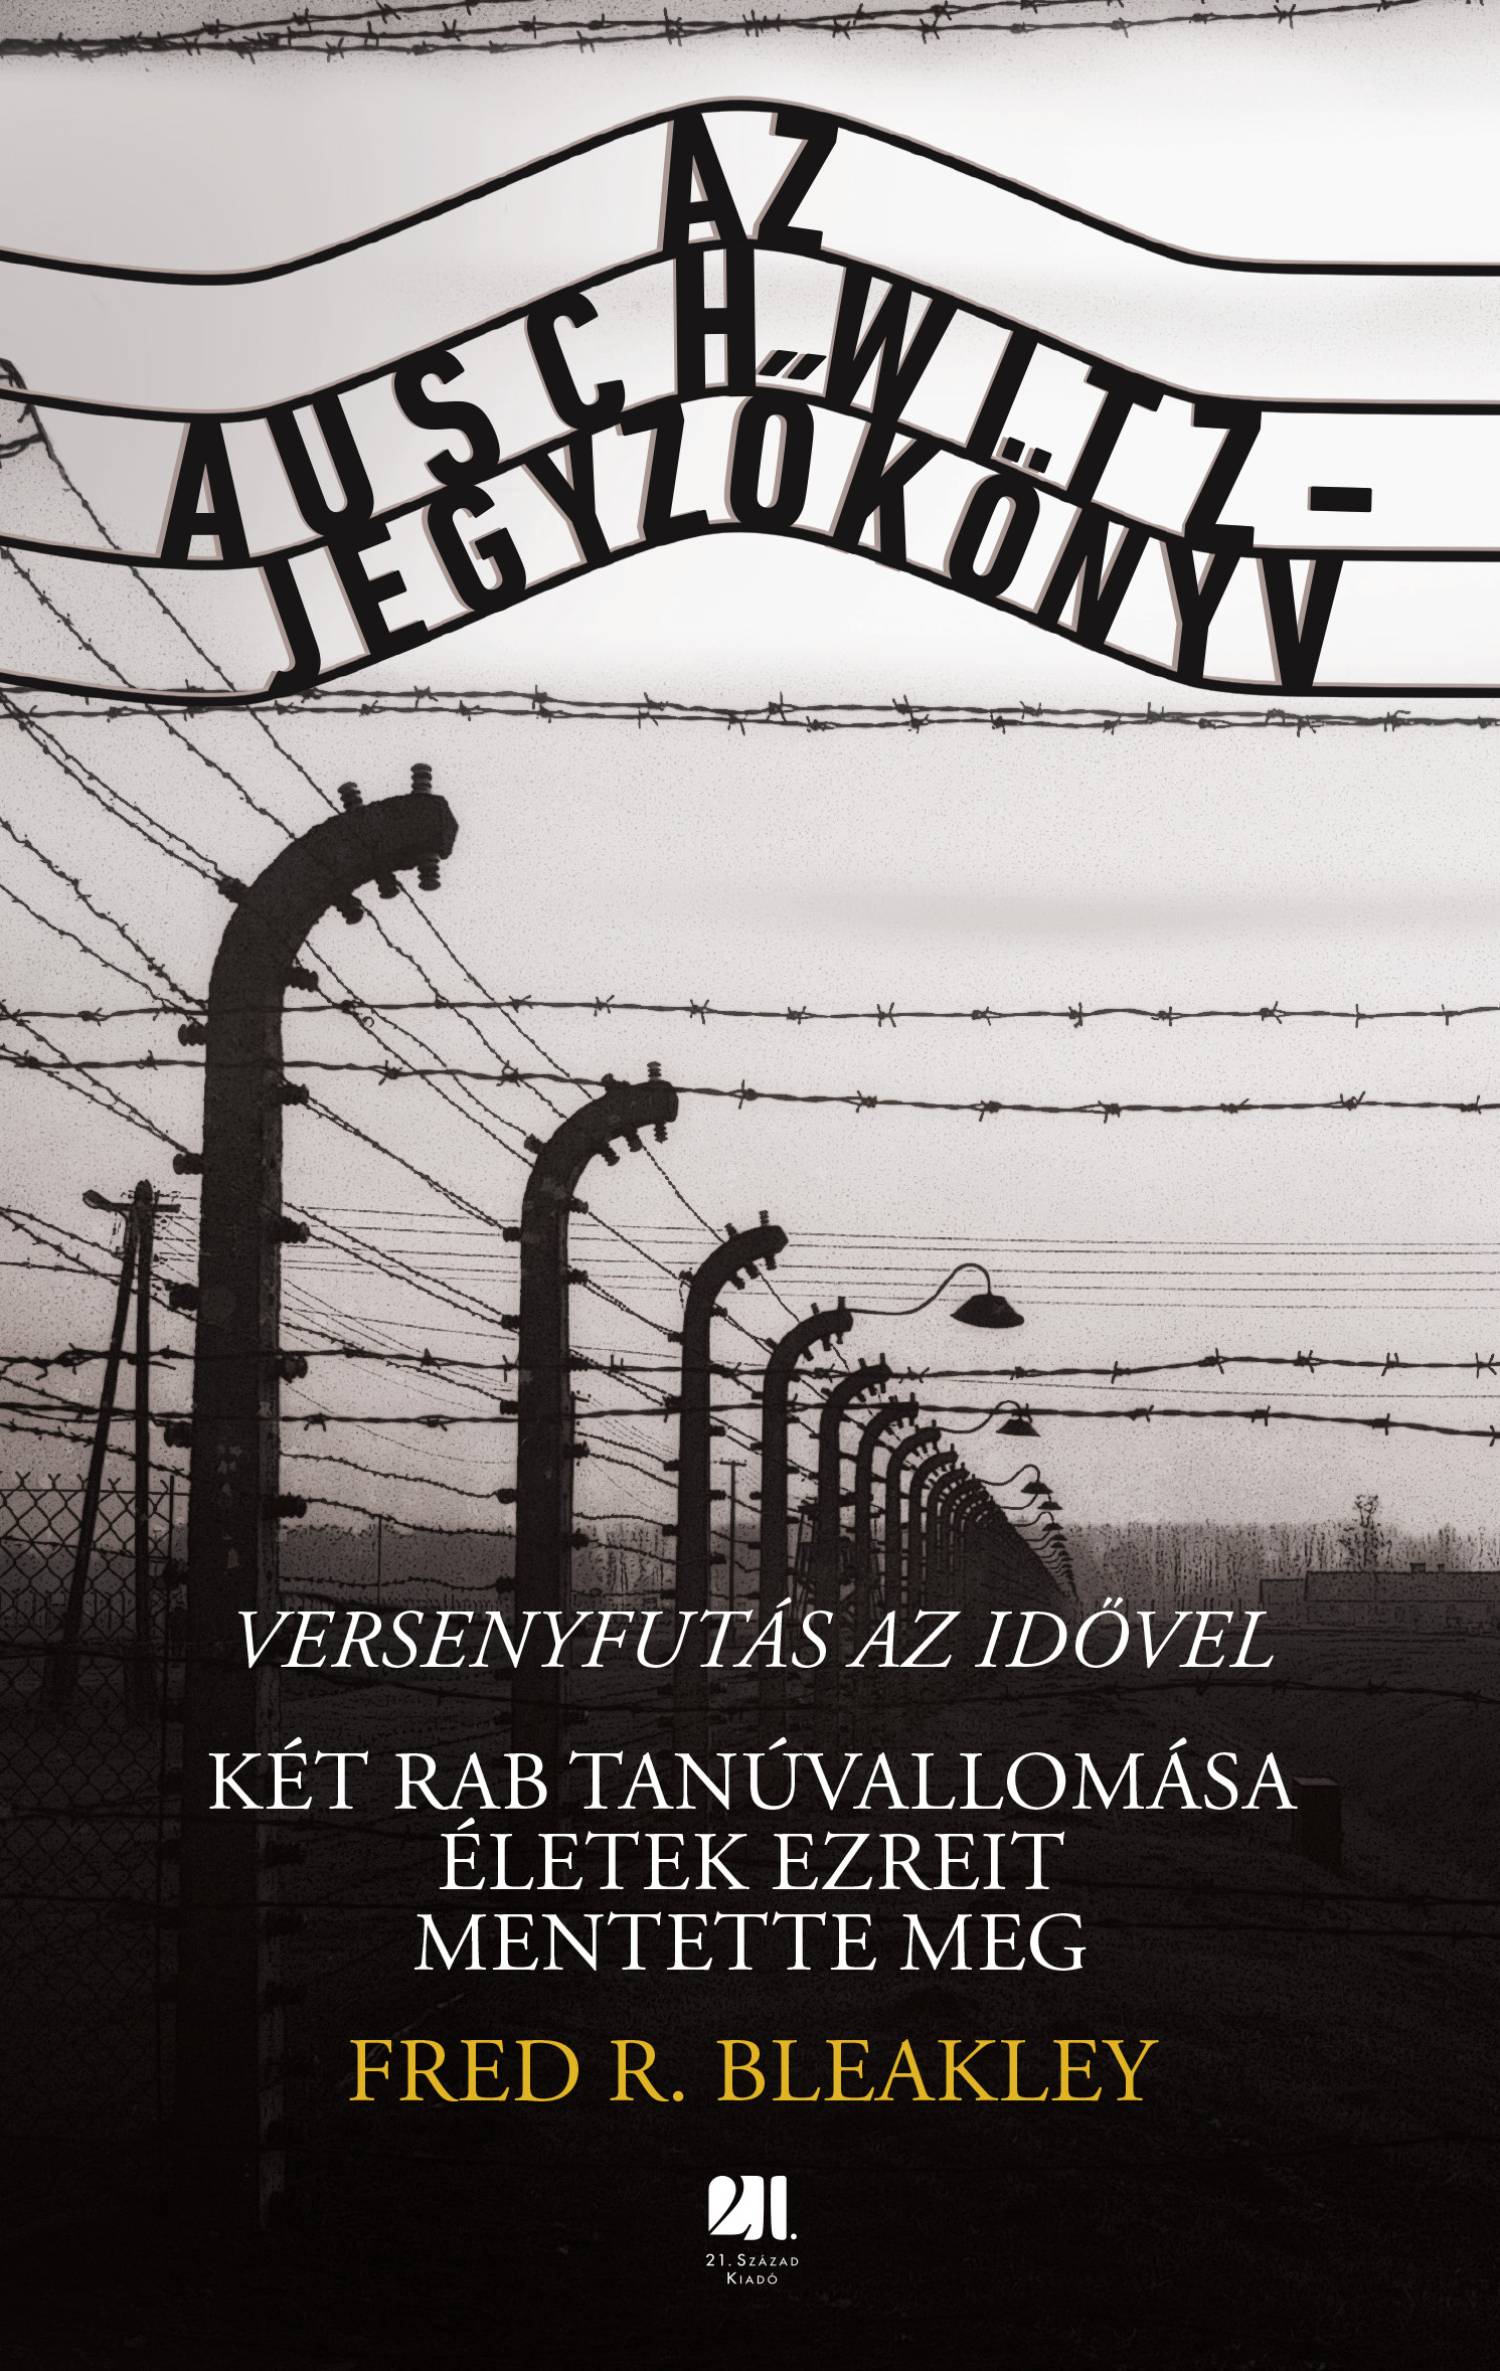 Az Auschwitz jegyzokonyv